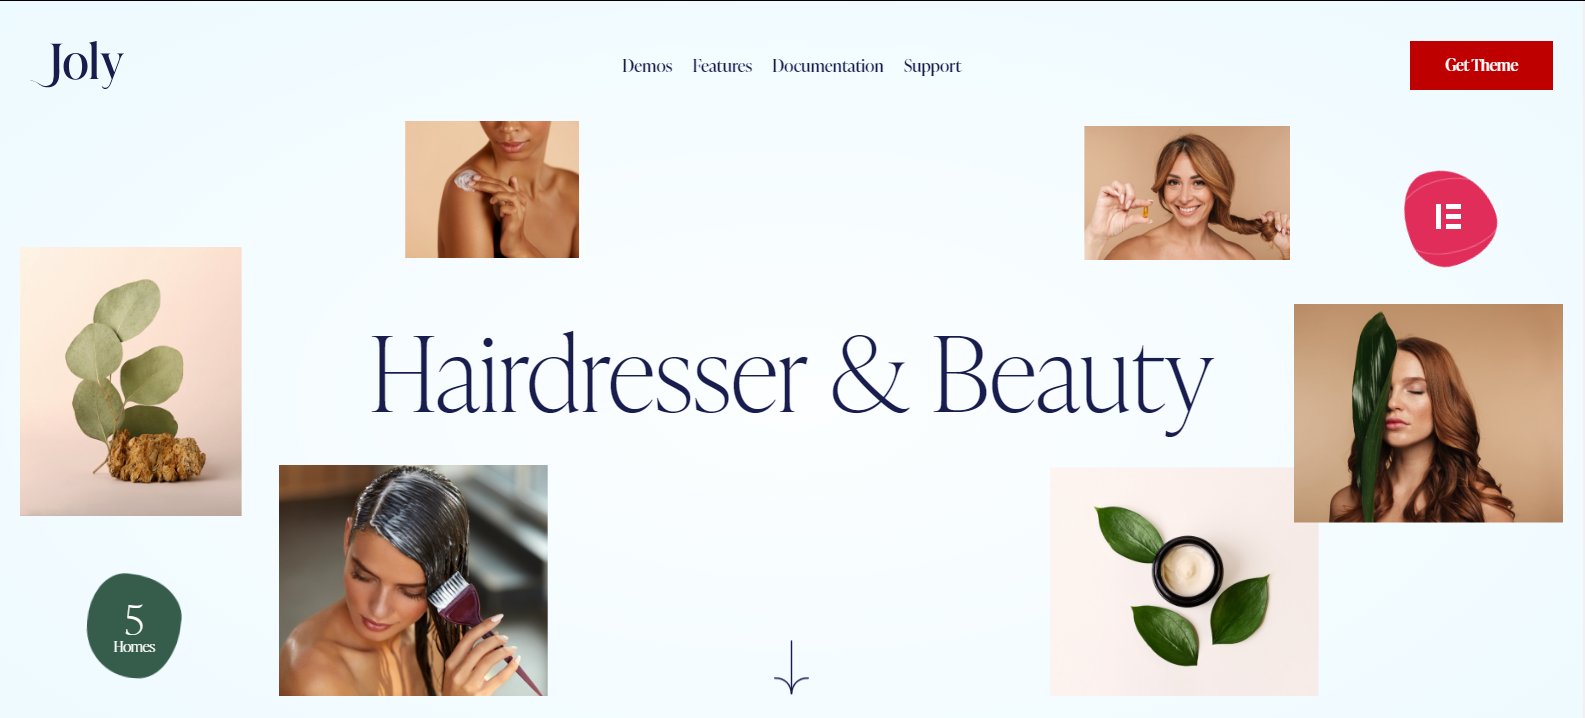 Joly v1.0 - Hairdresser & Beauty Salon WordPress Theme